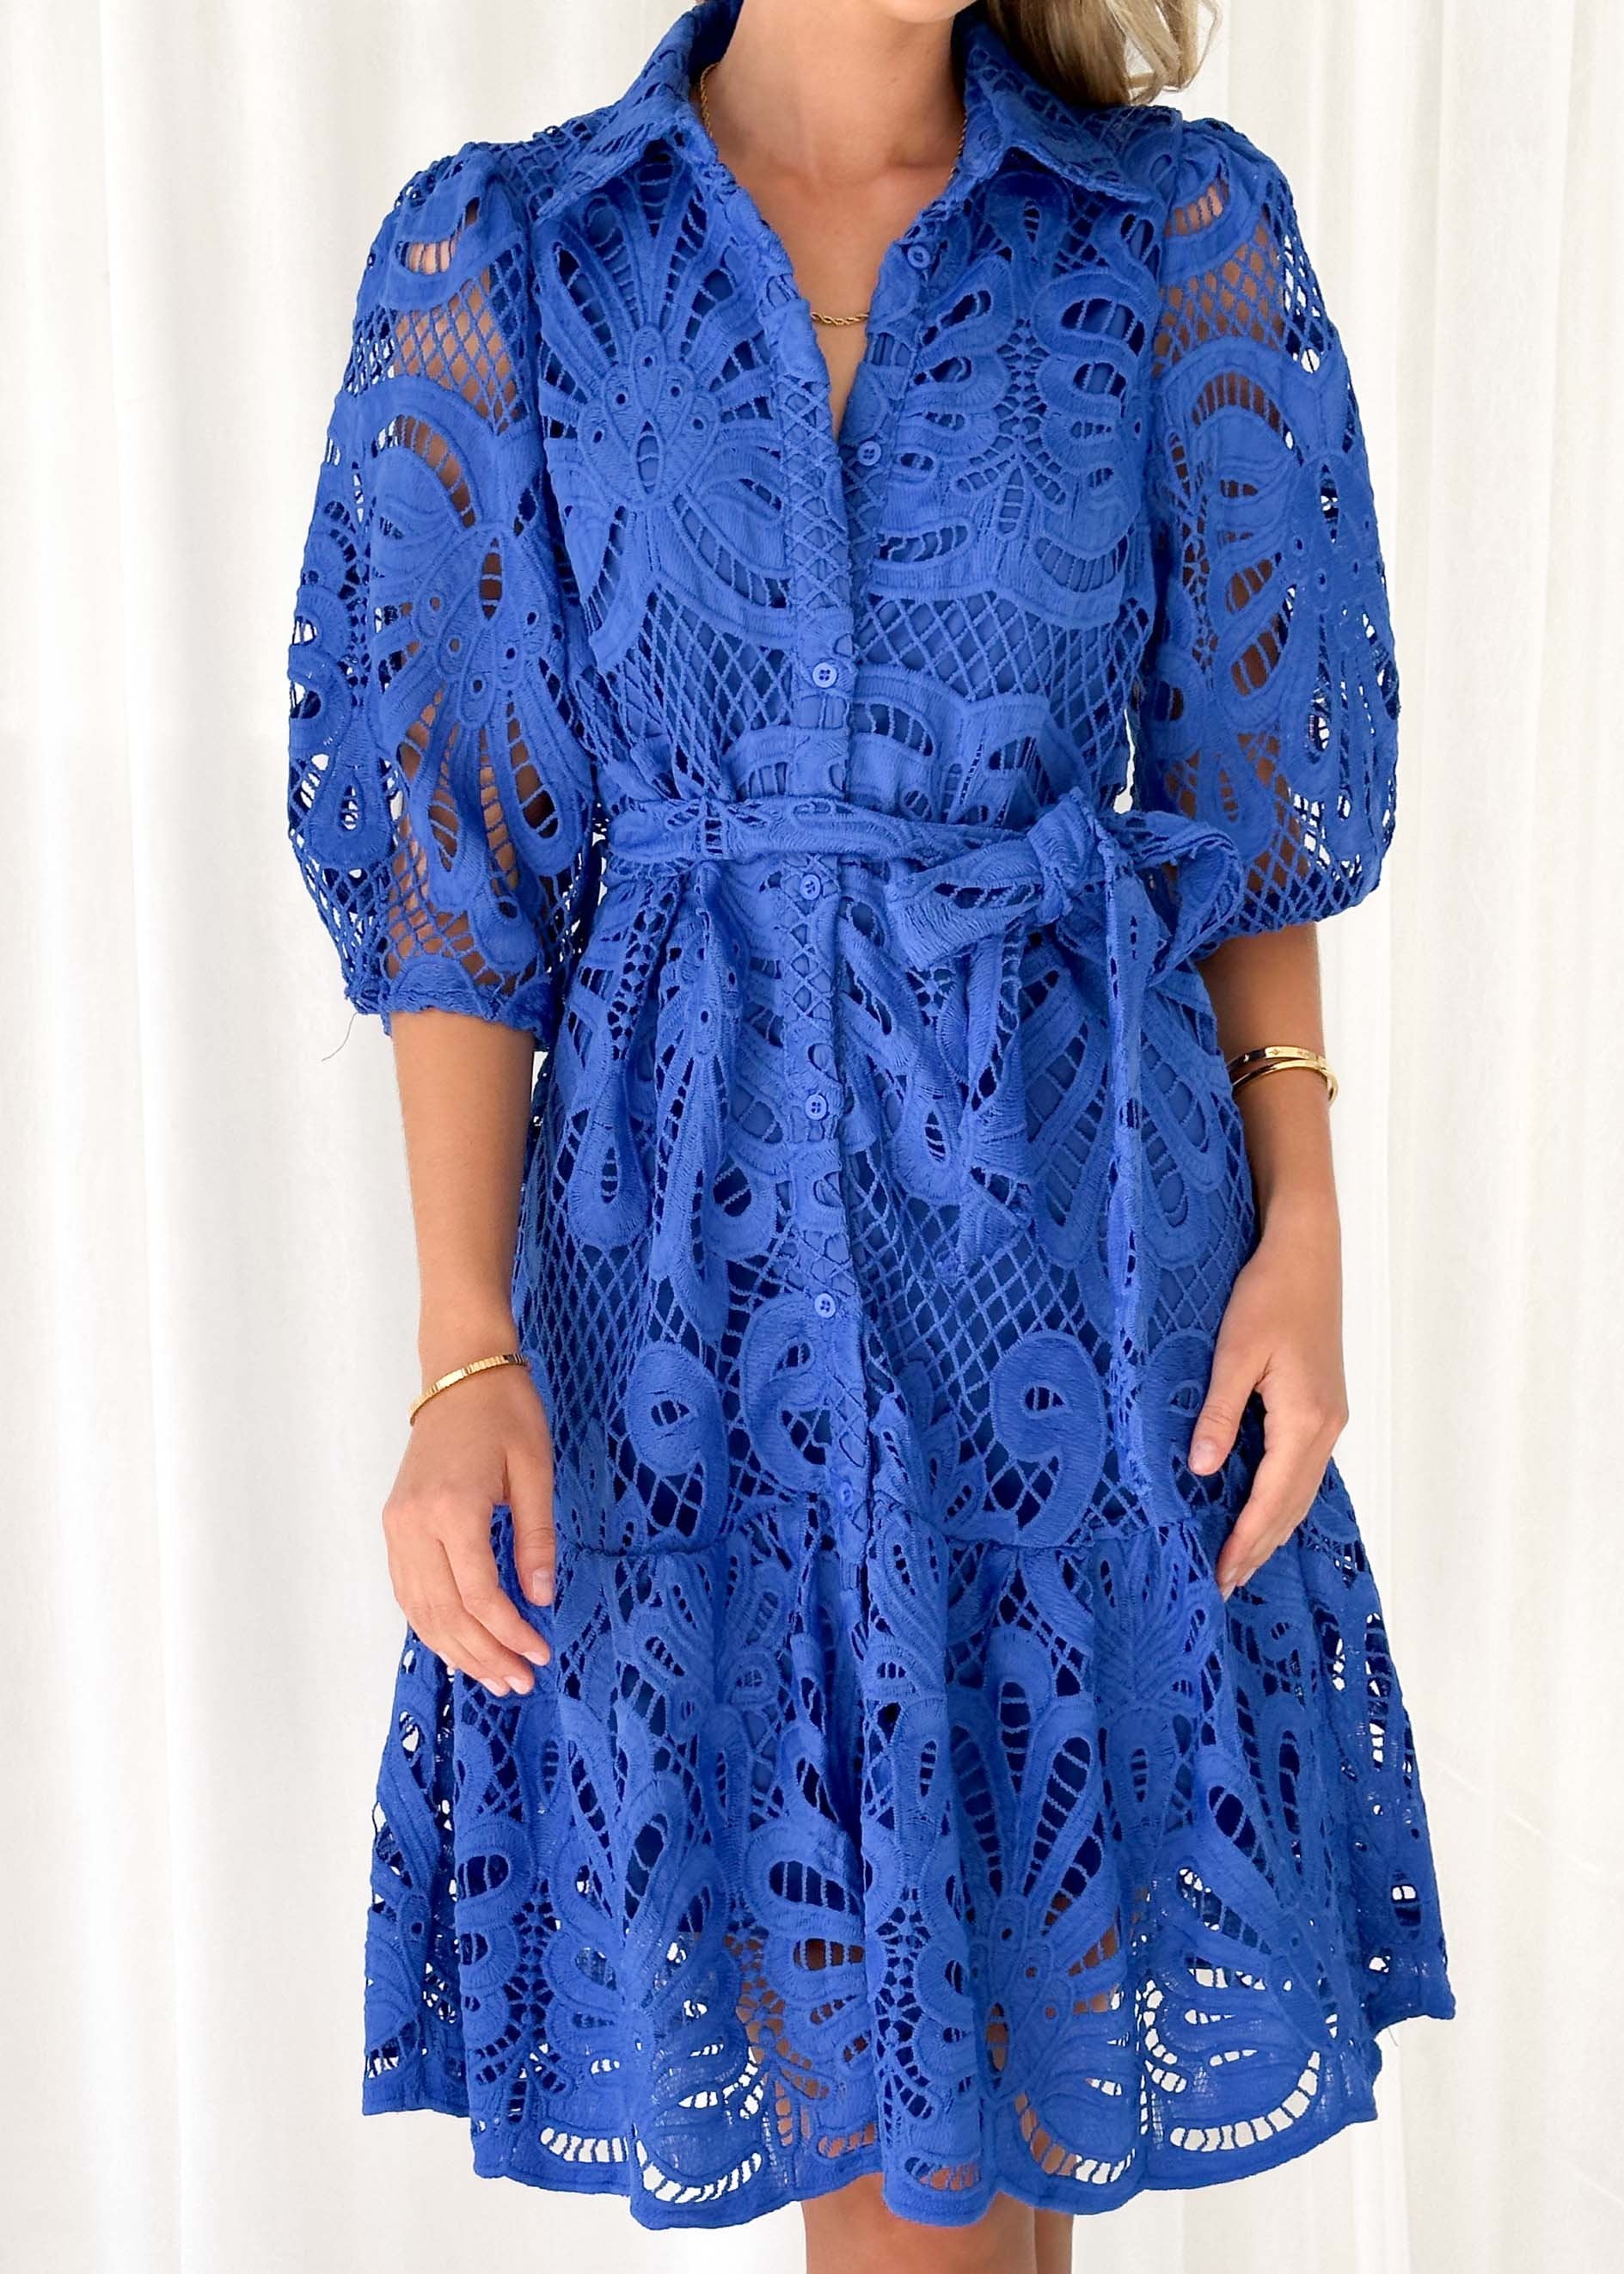 Nence Lace Dress - Cobalt